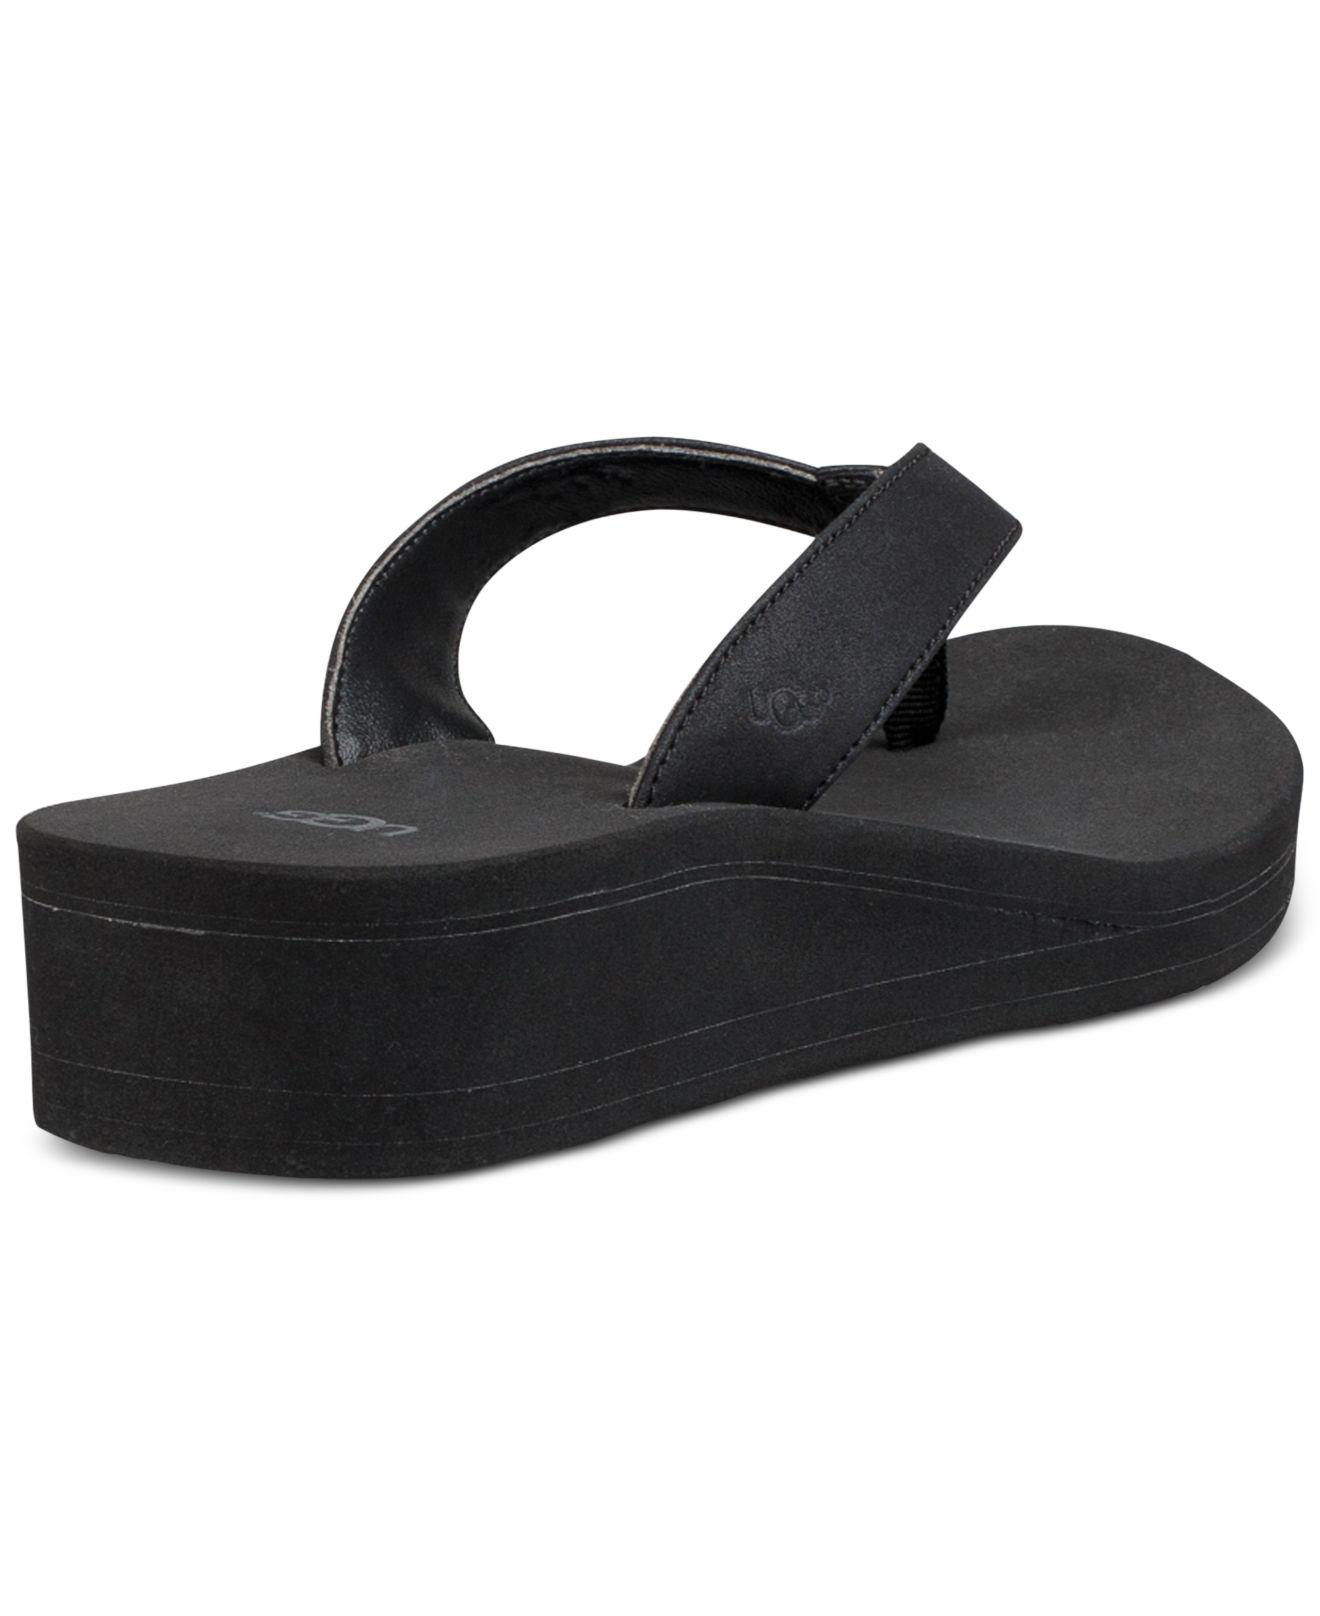 UGG Dani Wedge Beach Flip-flop Sandals in Black | Lyst